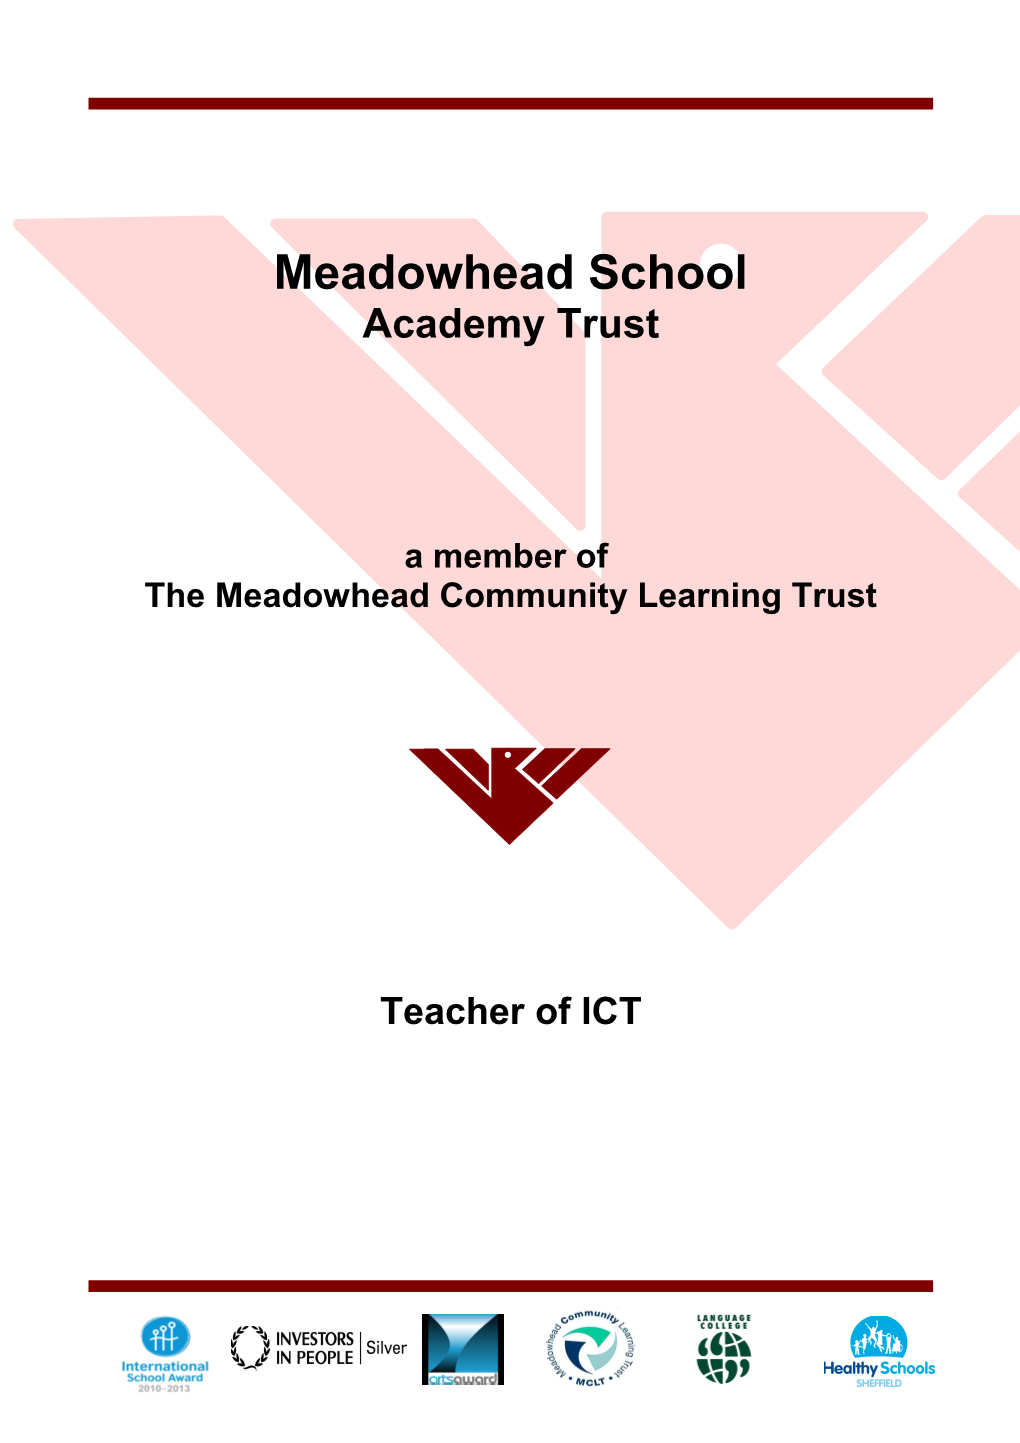 The Meadowhead Community Learning Trust